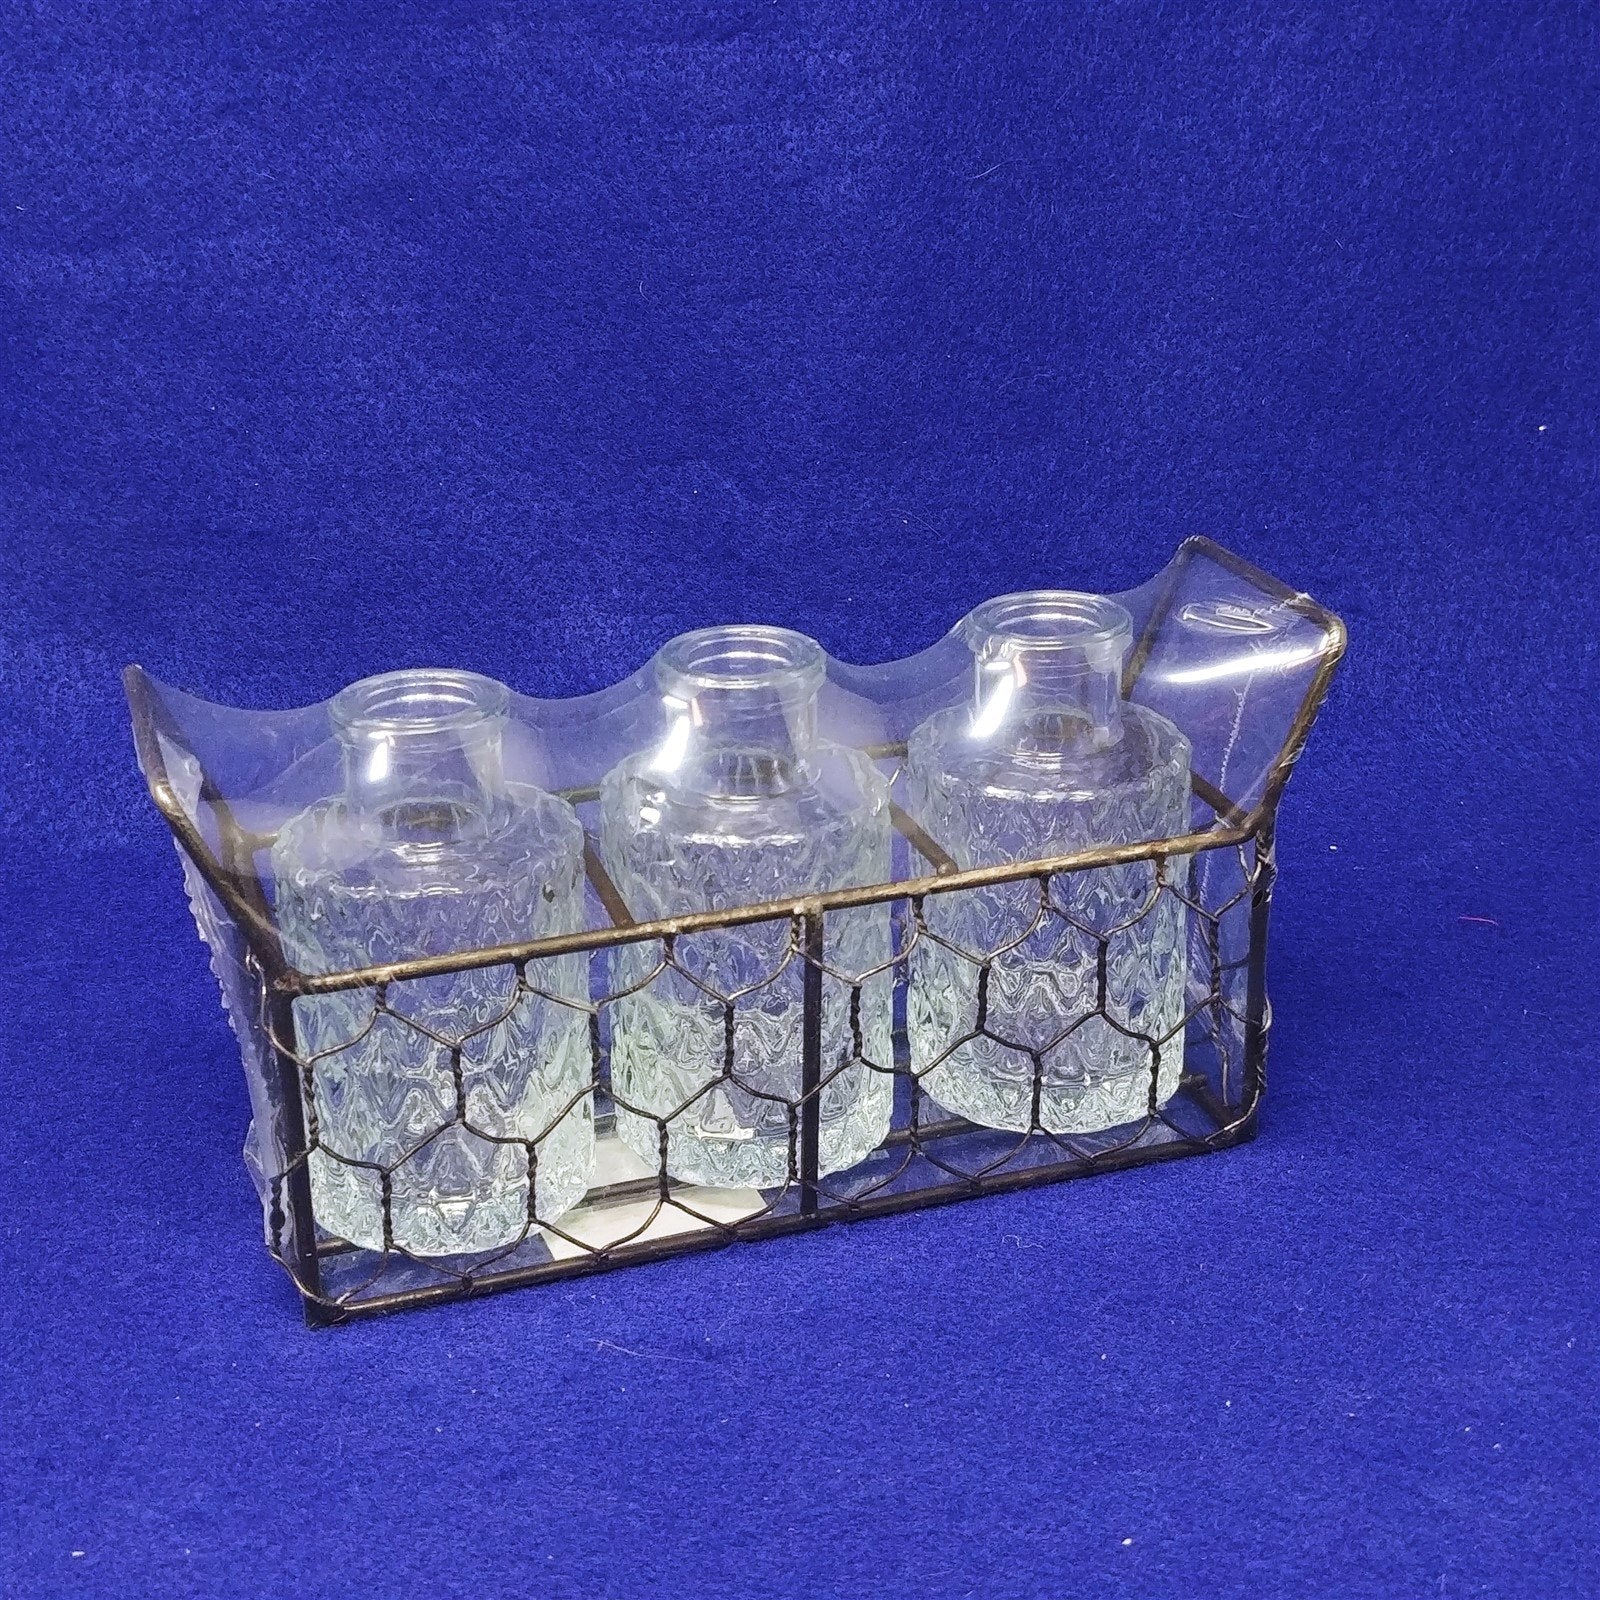 Wire Mesh Basket Glass Bottles Craft Wedding Farmhouse Shabby Chic Rustic